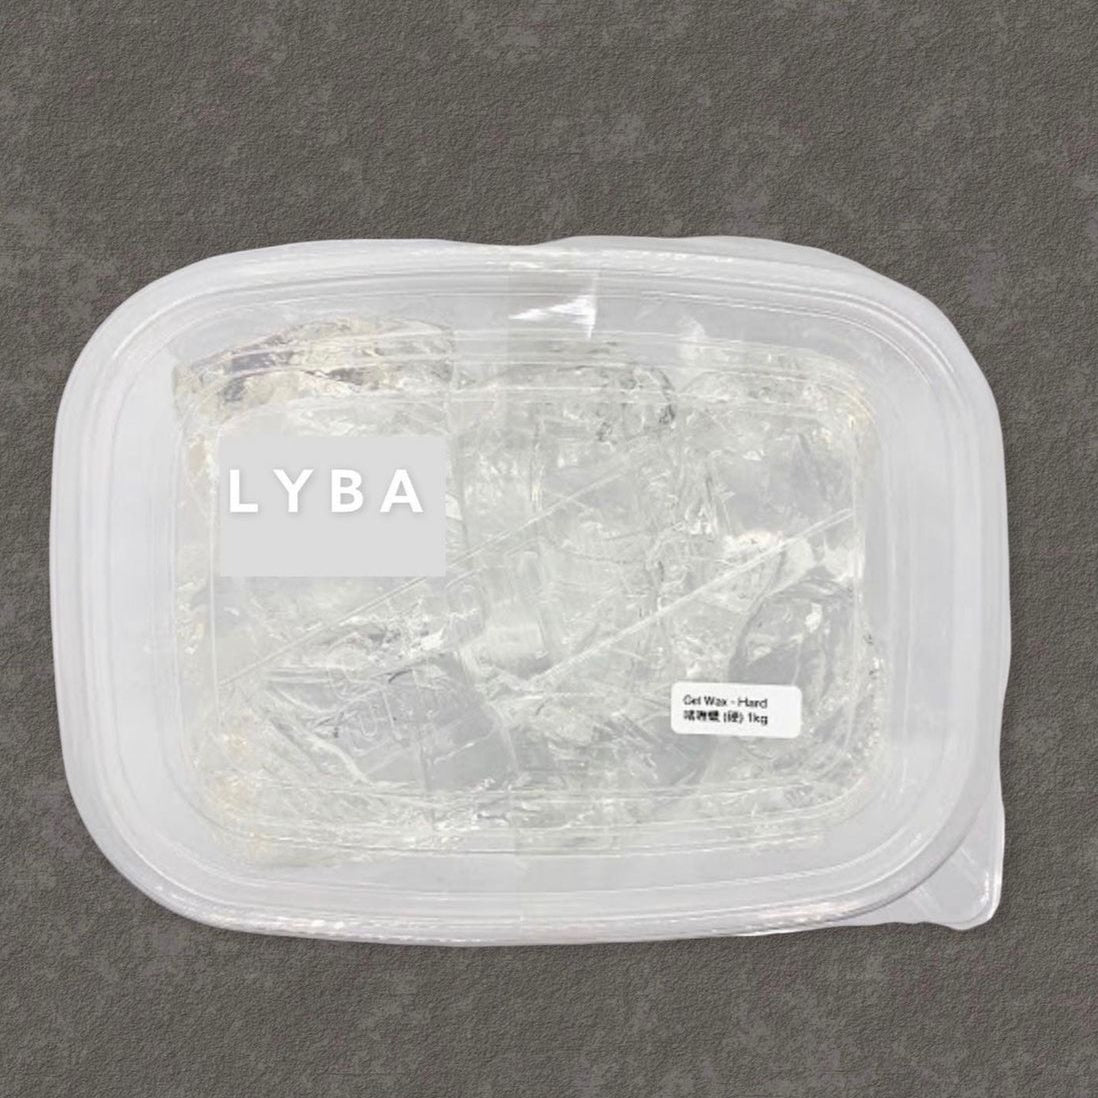 Lyba Gel Wax, 1 kg - Bakewareindia